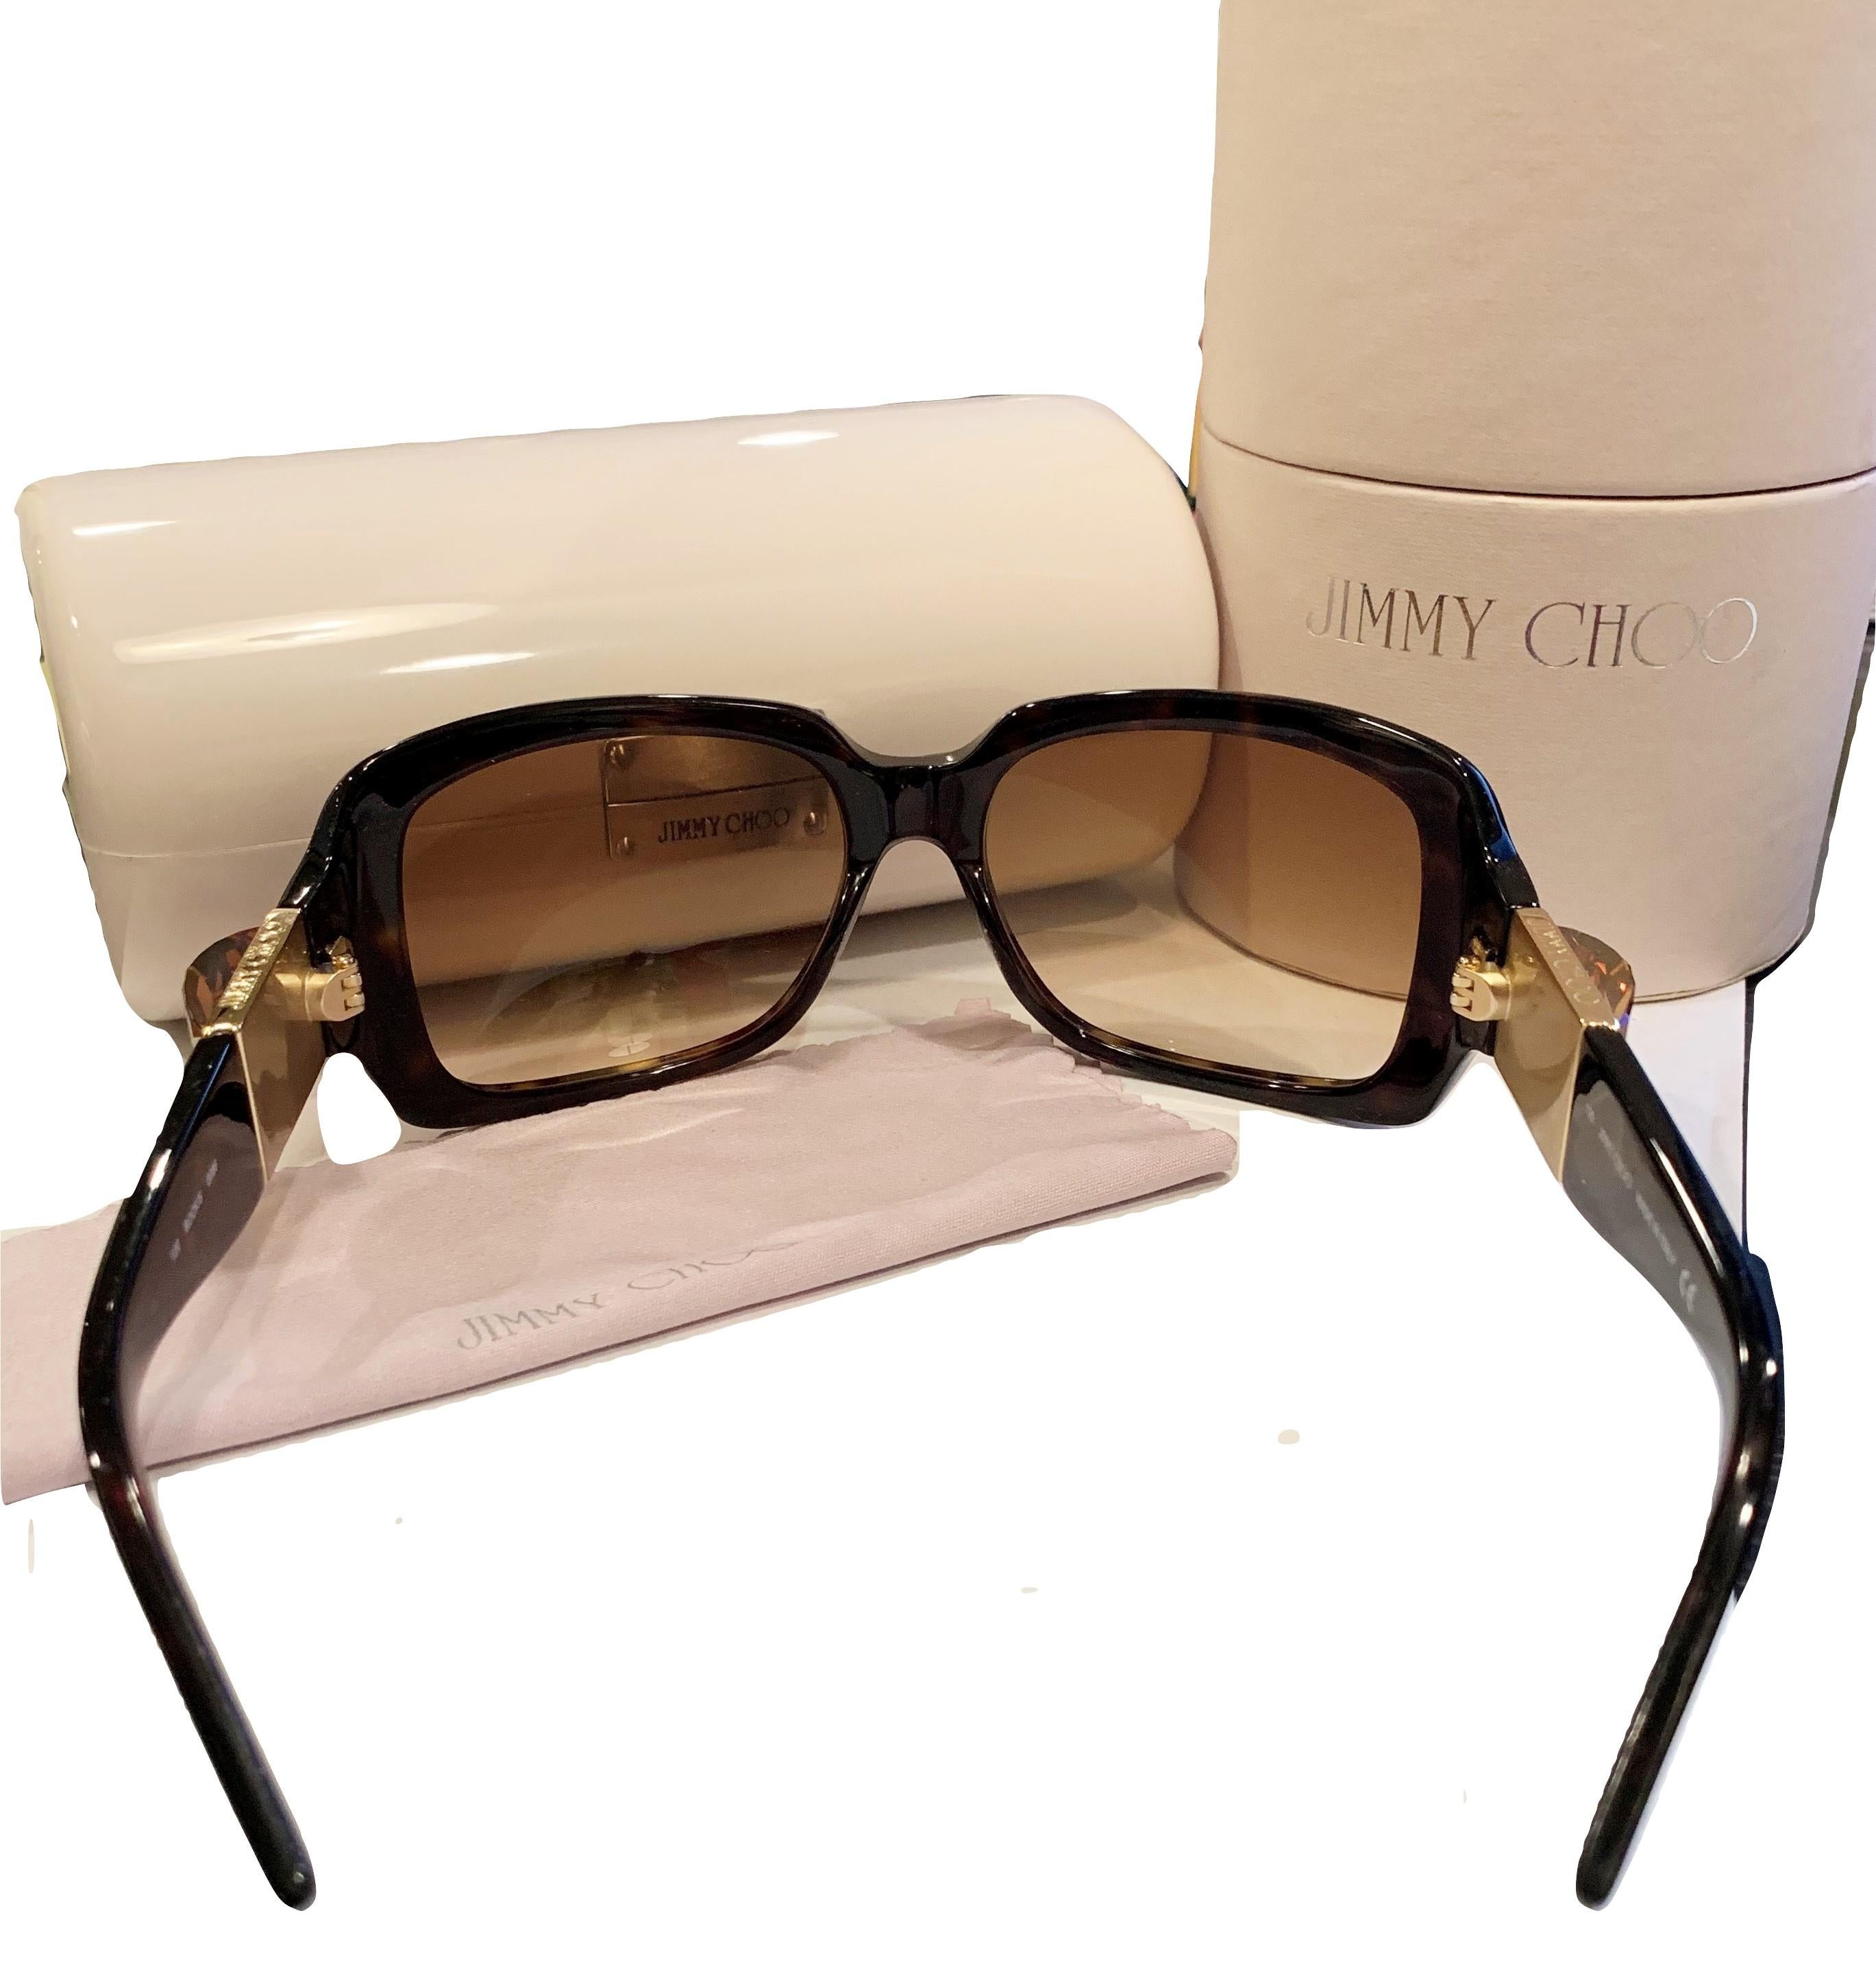 Women's New Jimmy Choo Swarovski Sunglasses With Case & Box $595